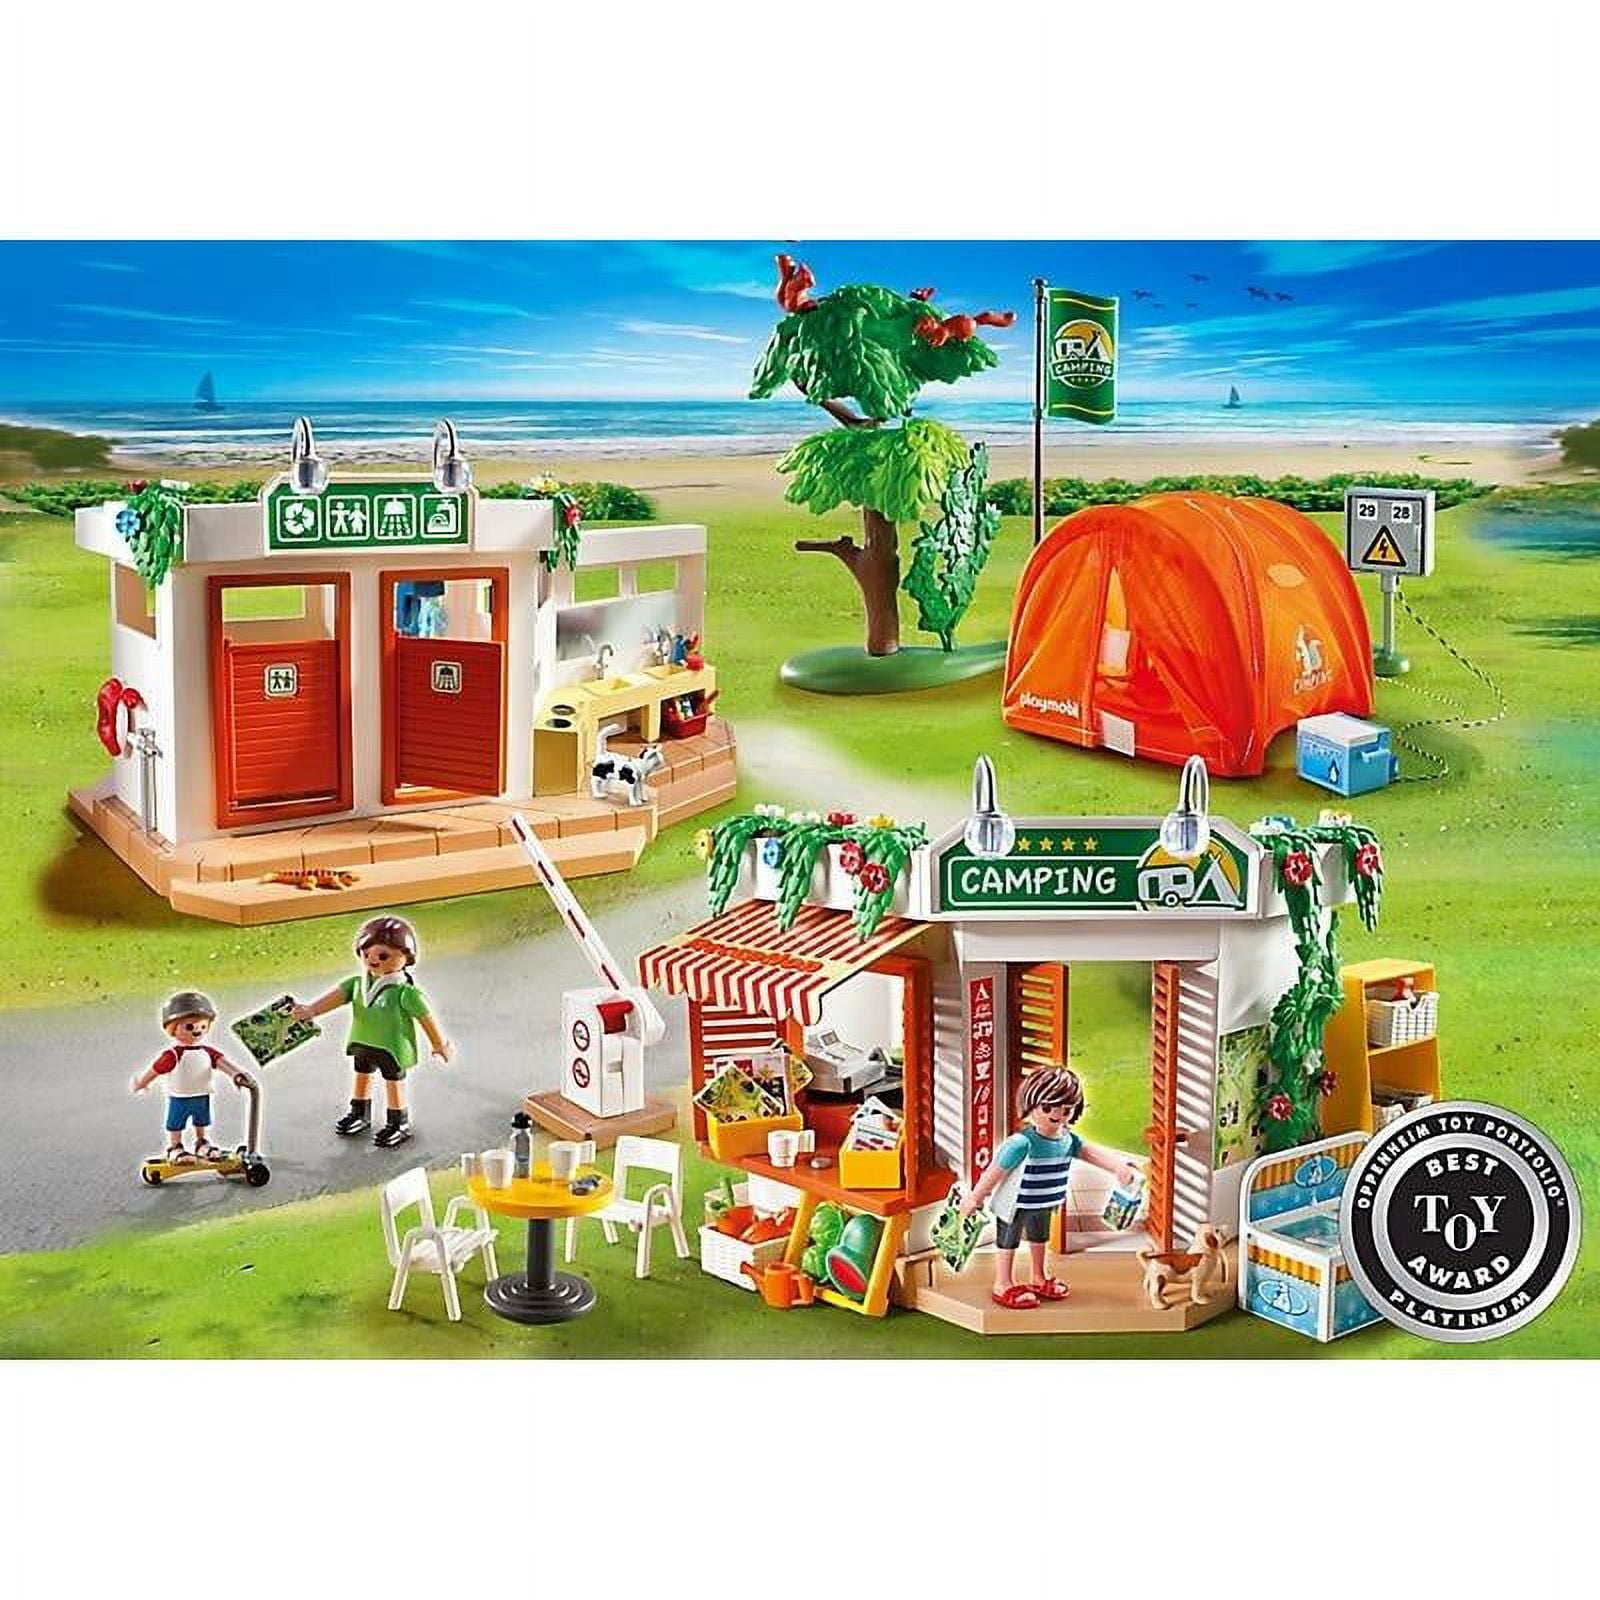 PLAYMOBIL Camp Site Summer Fun 5432 Huge Playset Camping Toys Boys